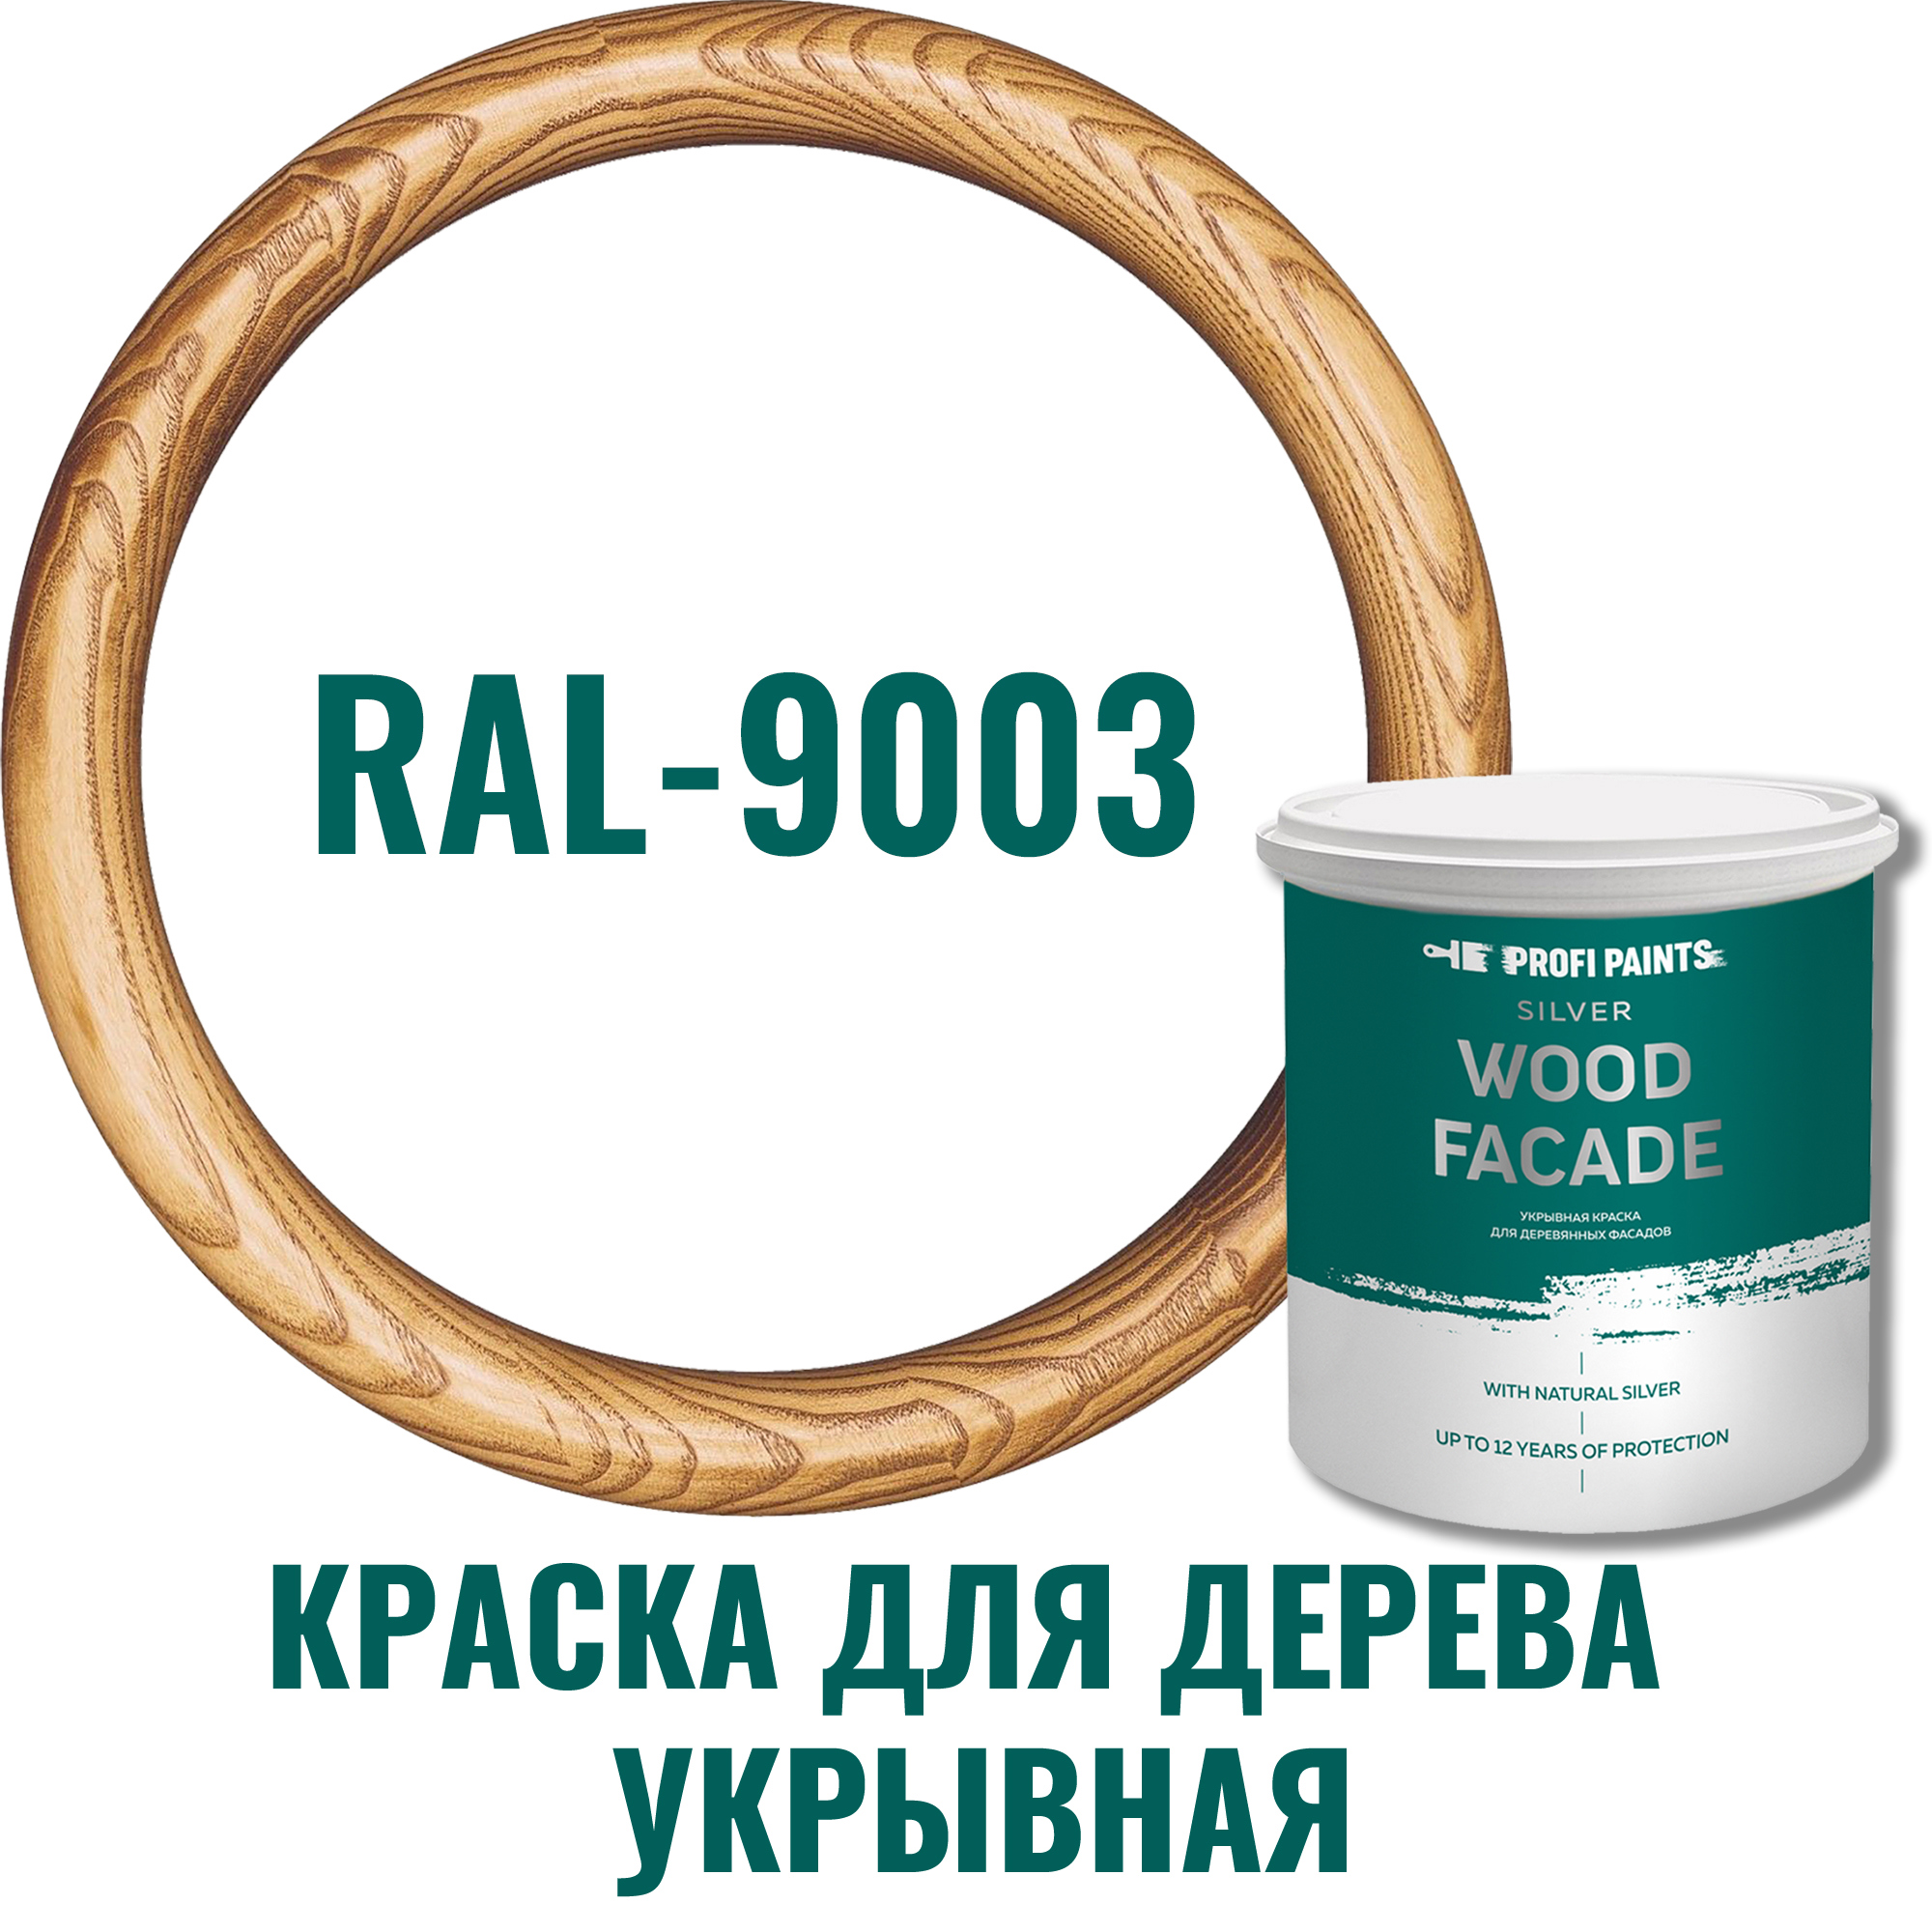 91106652 Краска для дерева 11293_D SILVER WOOD FASADE цвет RAL-9003 белый 2.7 л STLM-0487643 PROFIPAINTS